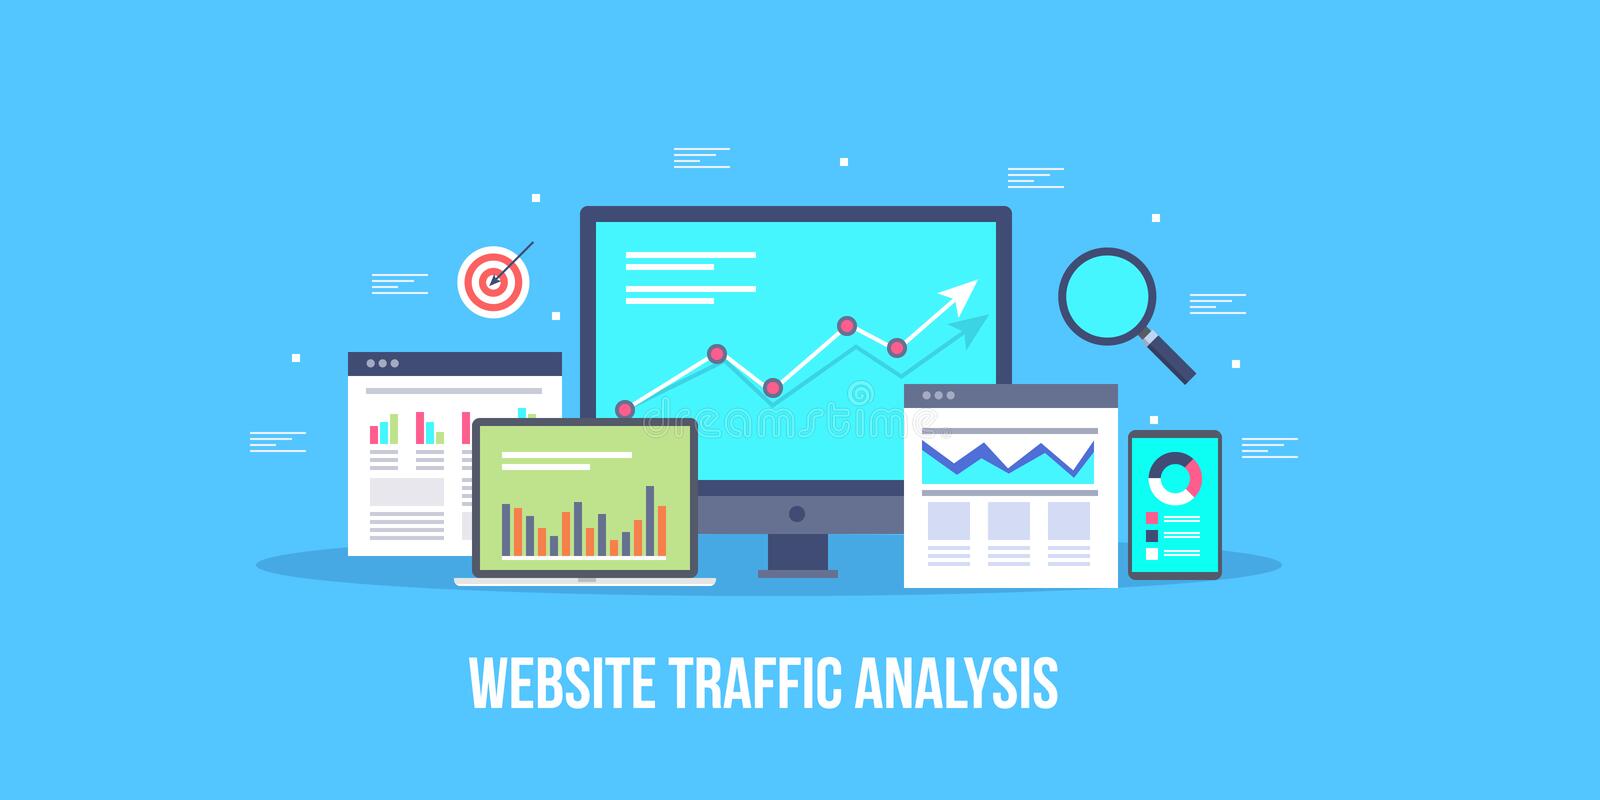 7 Vital Elements Of Successful Website Traffic Analytics